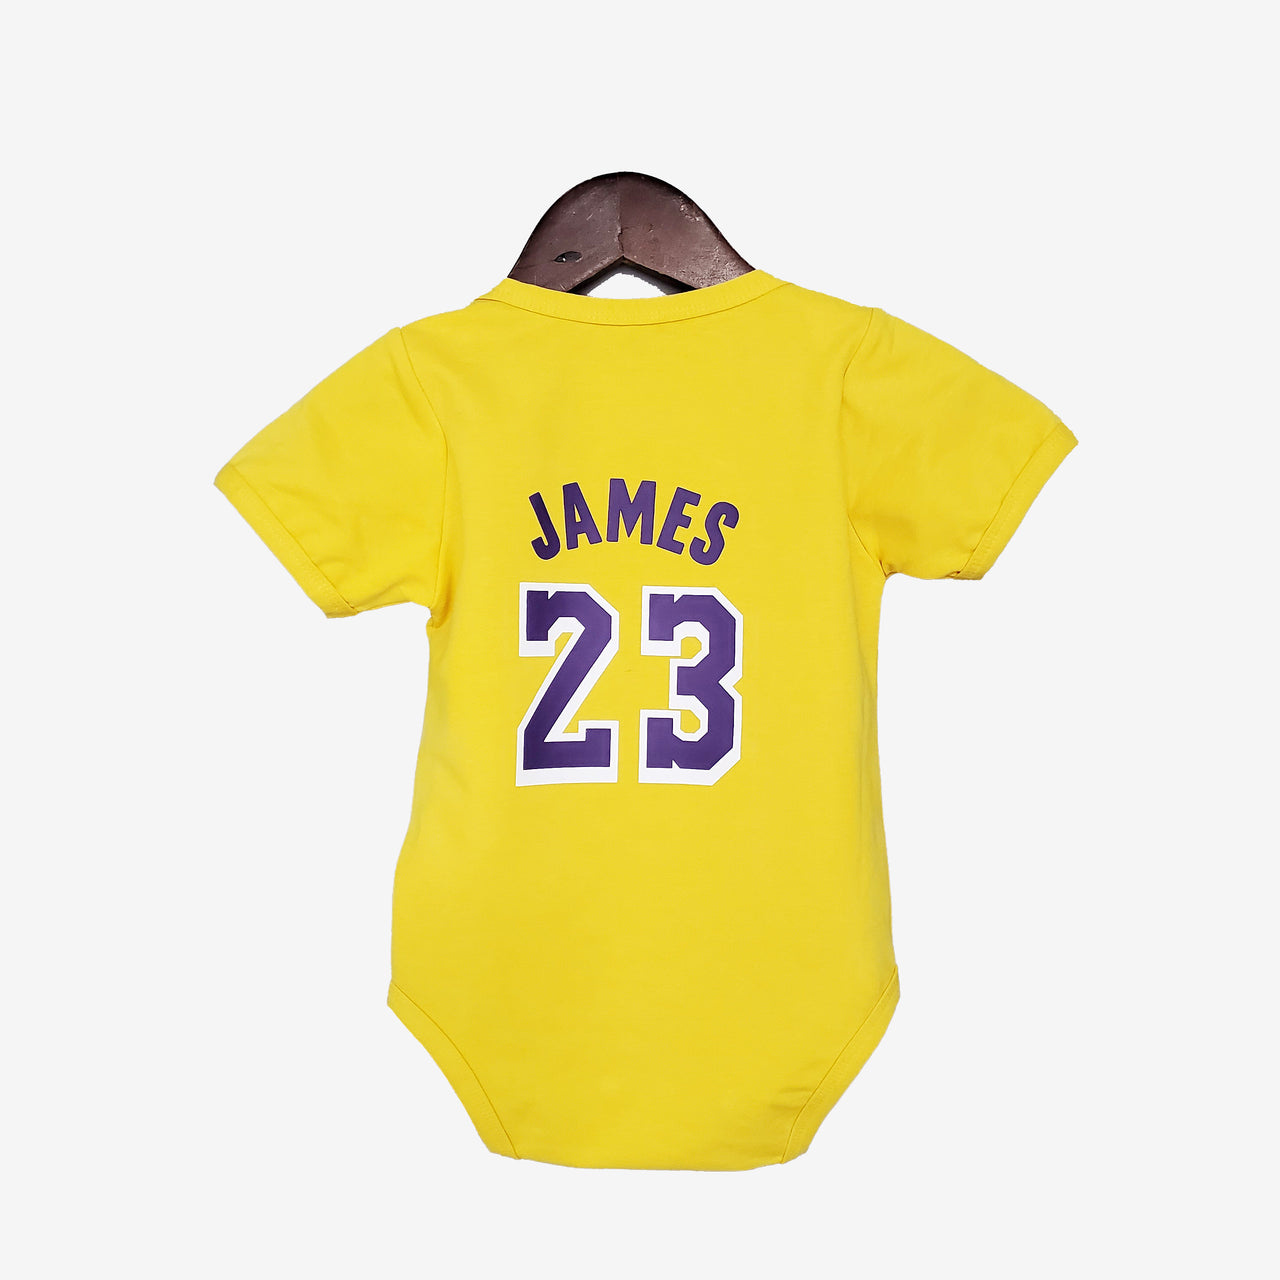 Lakers Baby Baumwolljersey Gelb